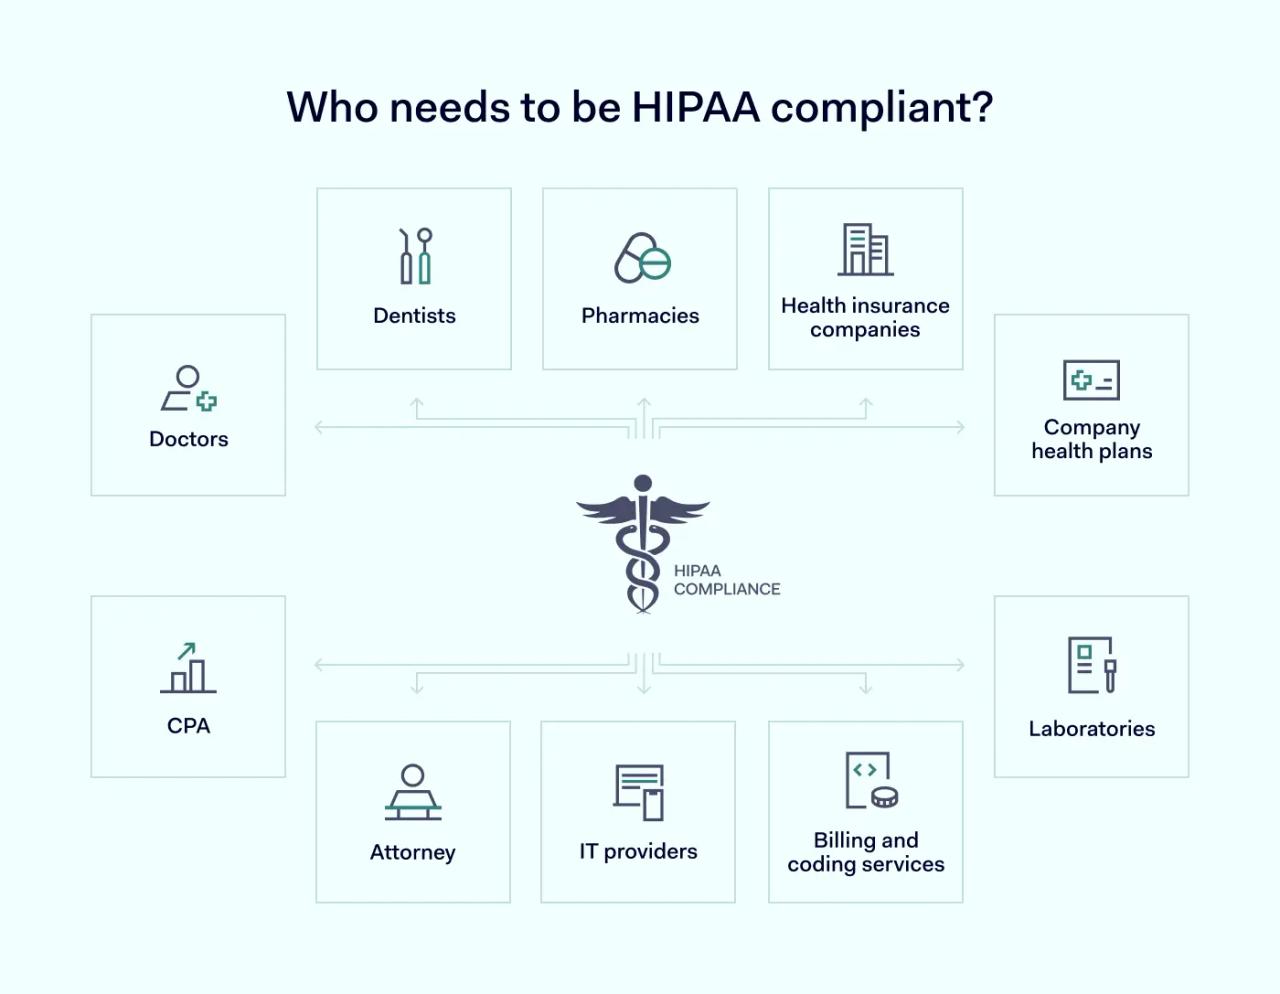 Who needs to be HIPAA compliant